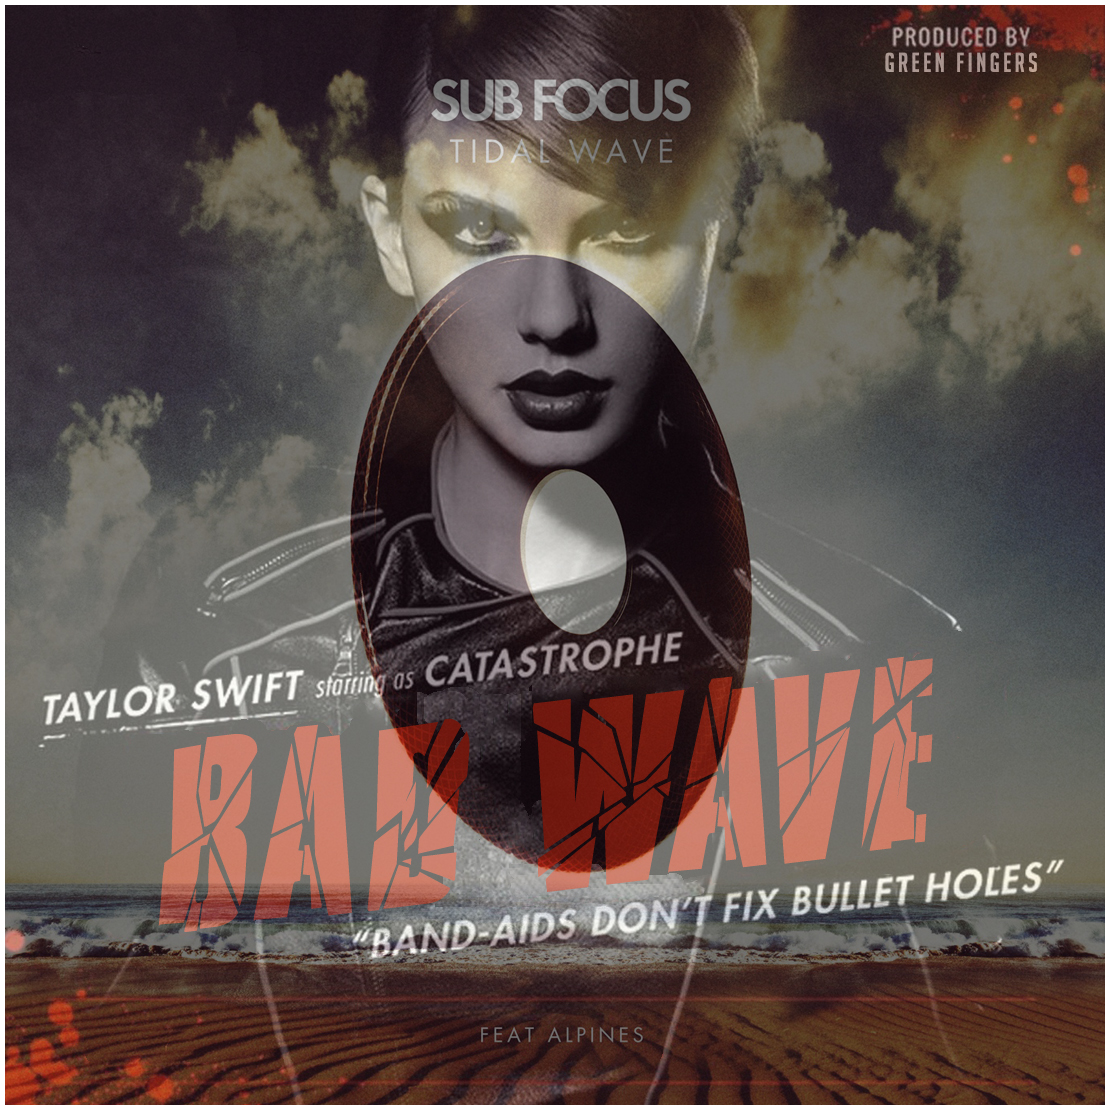 Taylor Swift vs Sub Focus cover